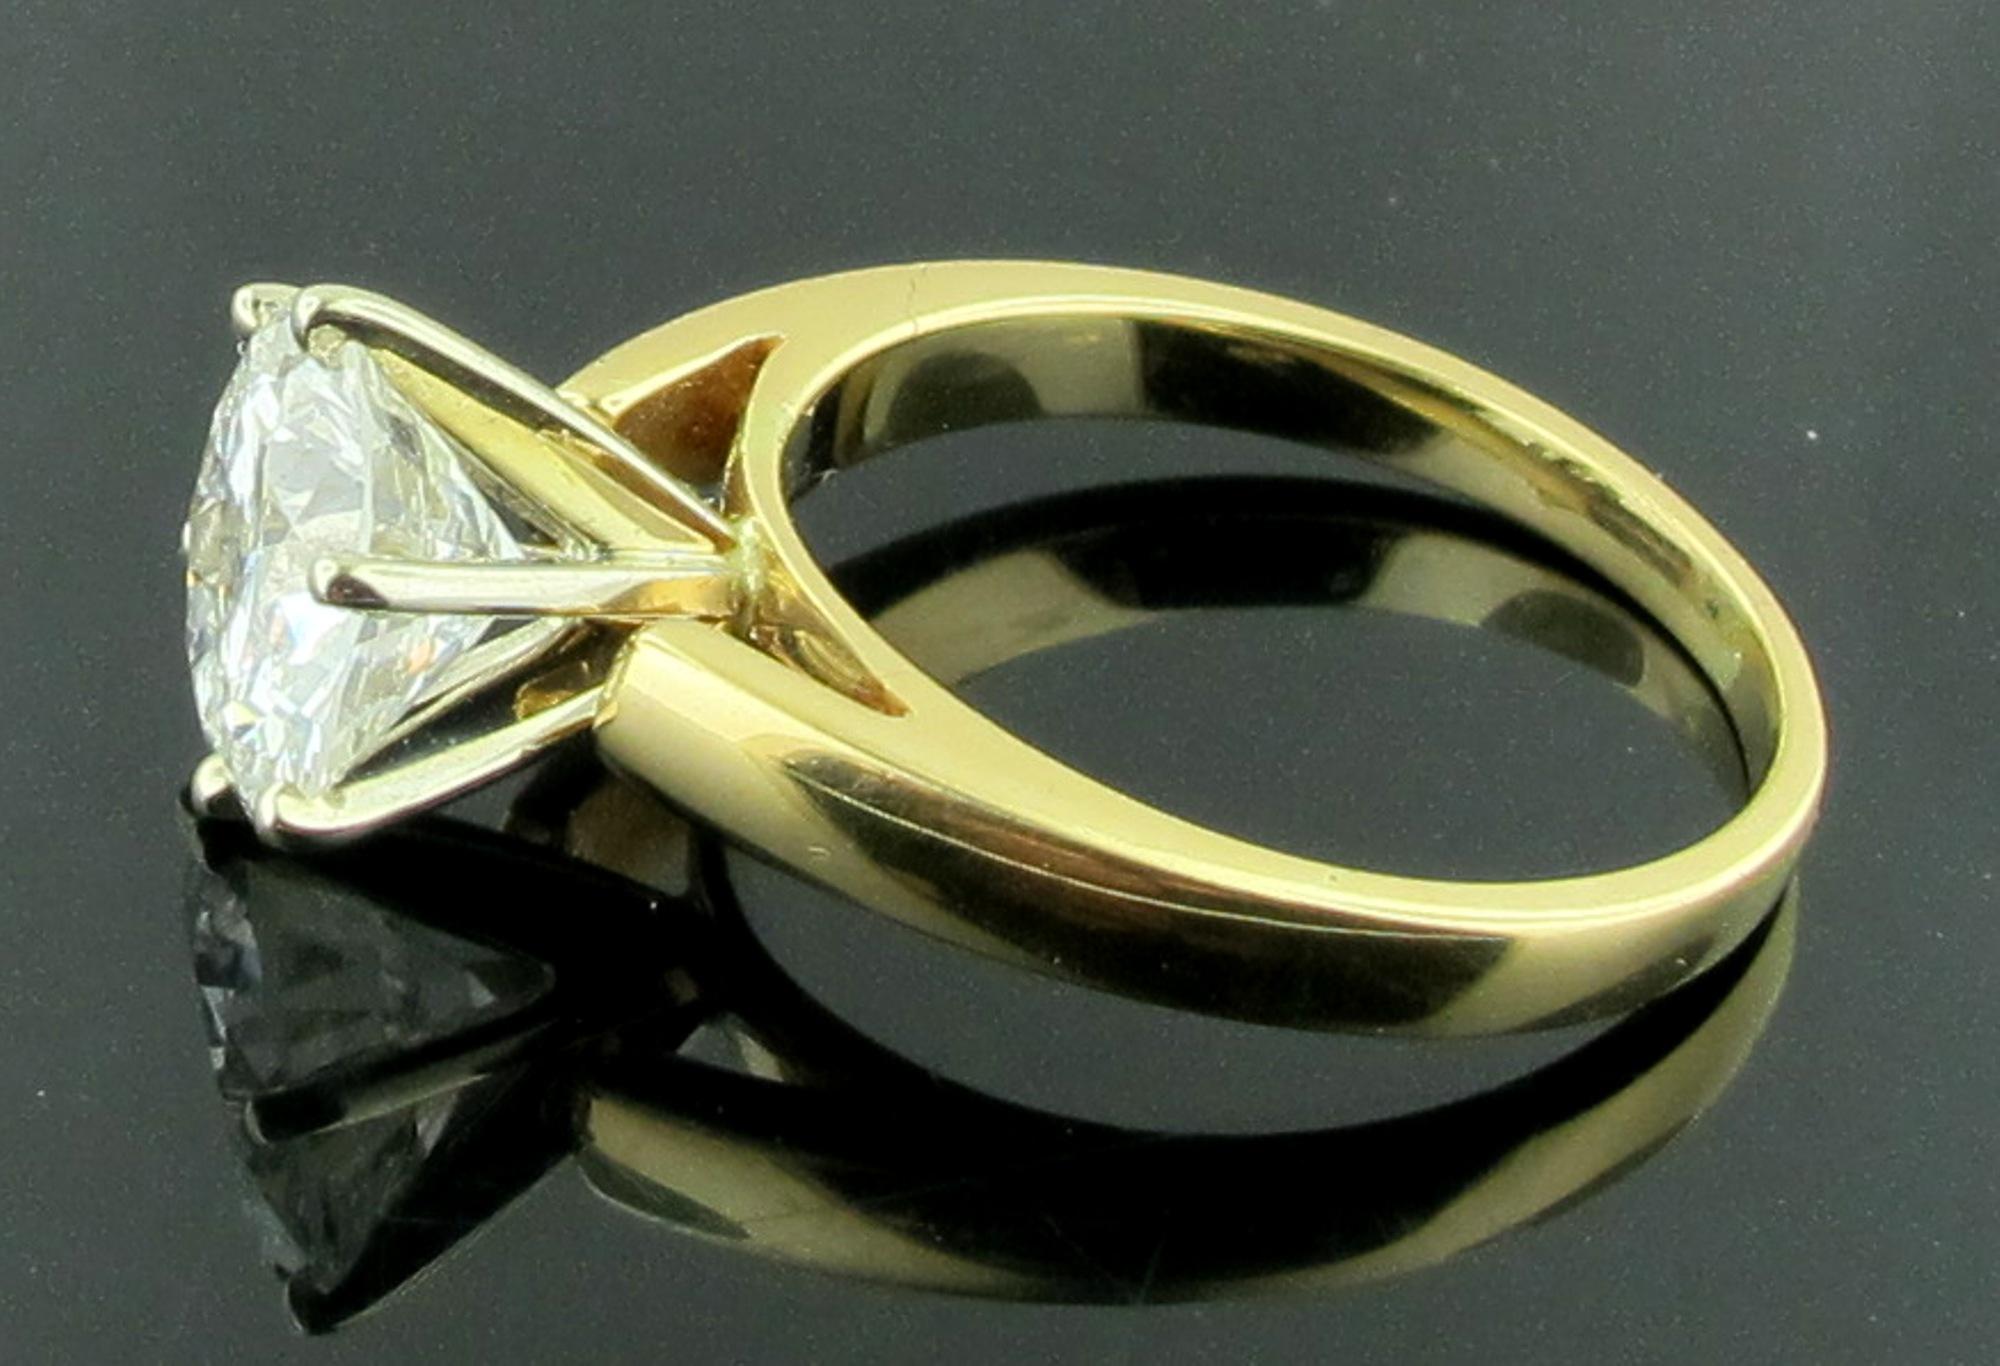 Round Cut 2.53 Carat Round Brilliant Cut Solitaire Diamond Ring in 14 Karat Yellow Gold